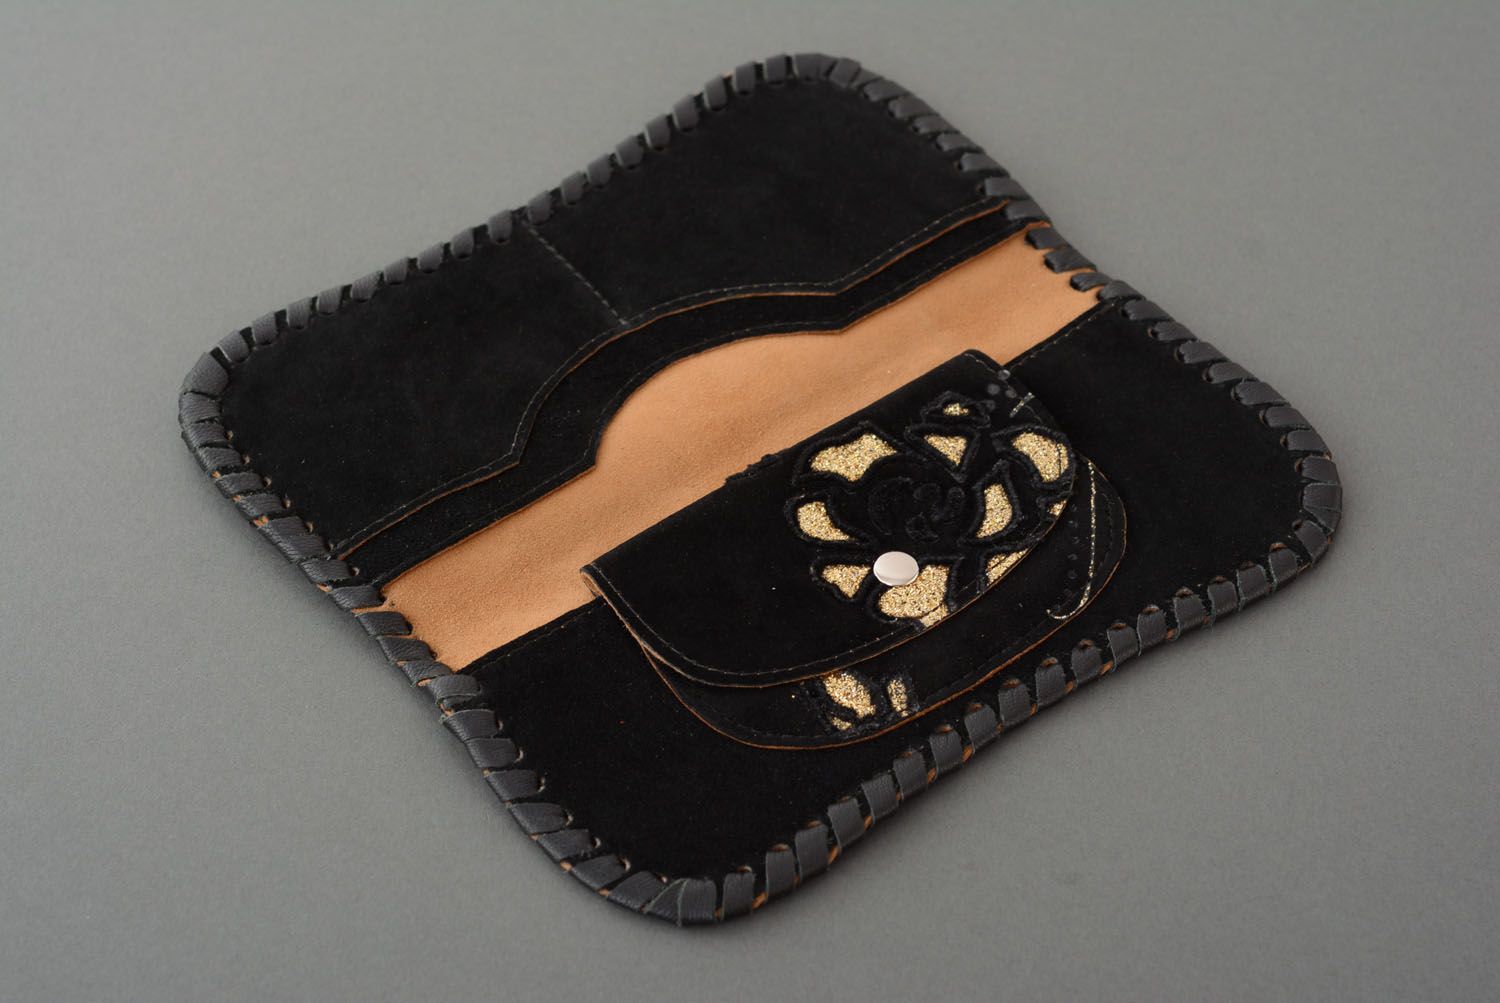 Homemade leather purse photo 2